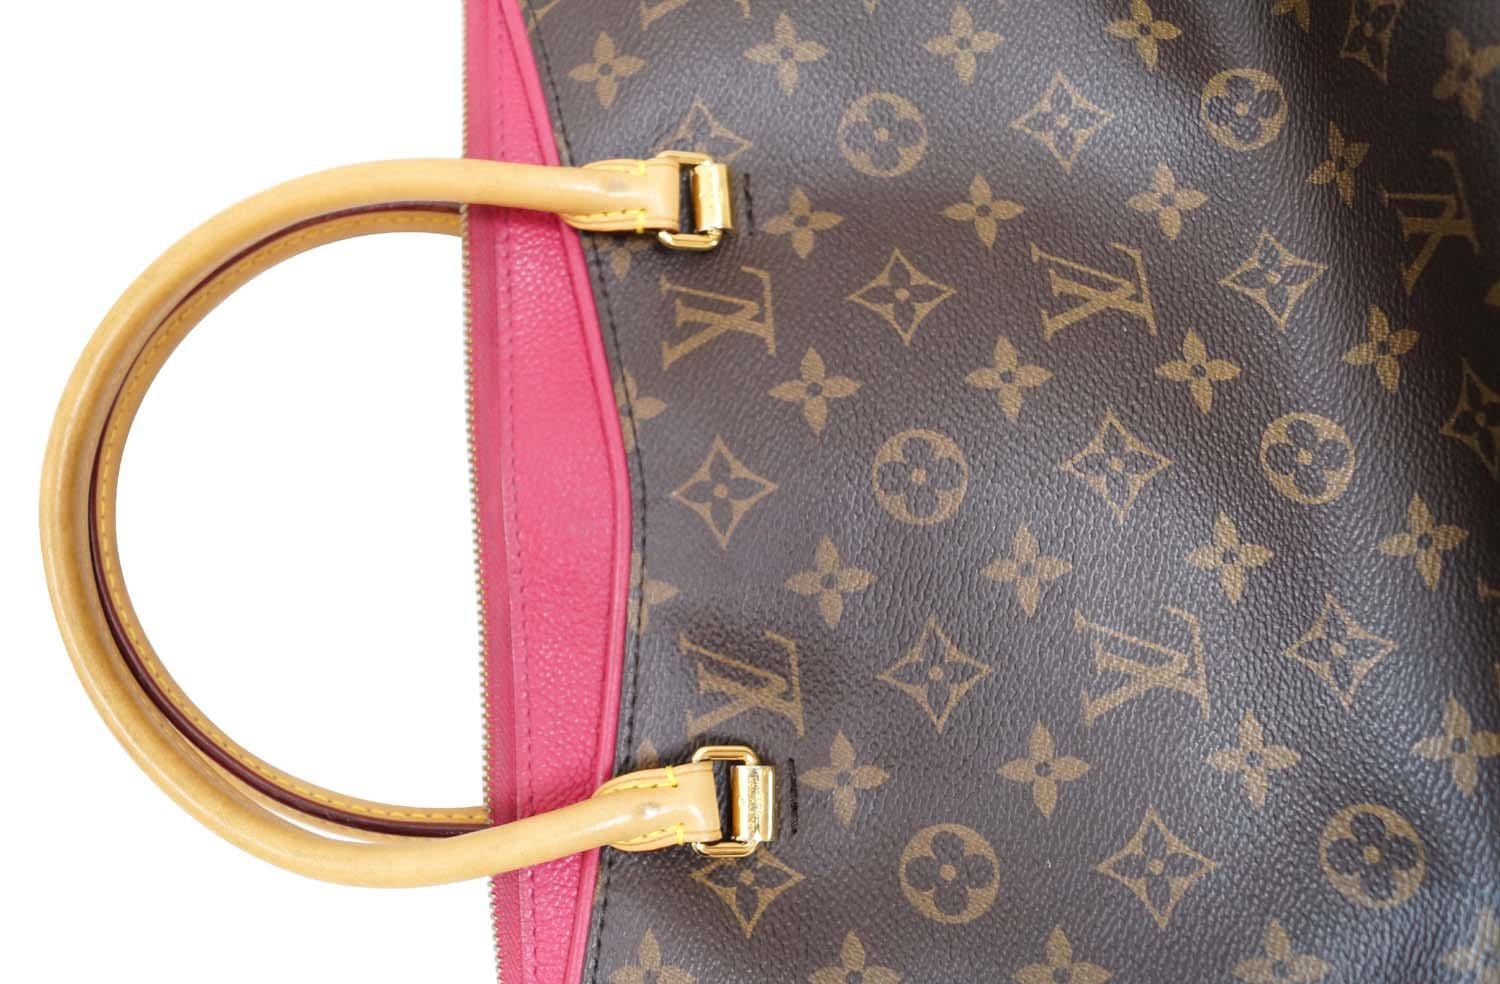 Louis Vuitton Pallas Shoulder Bag Medium Bags & Handbags for Women